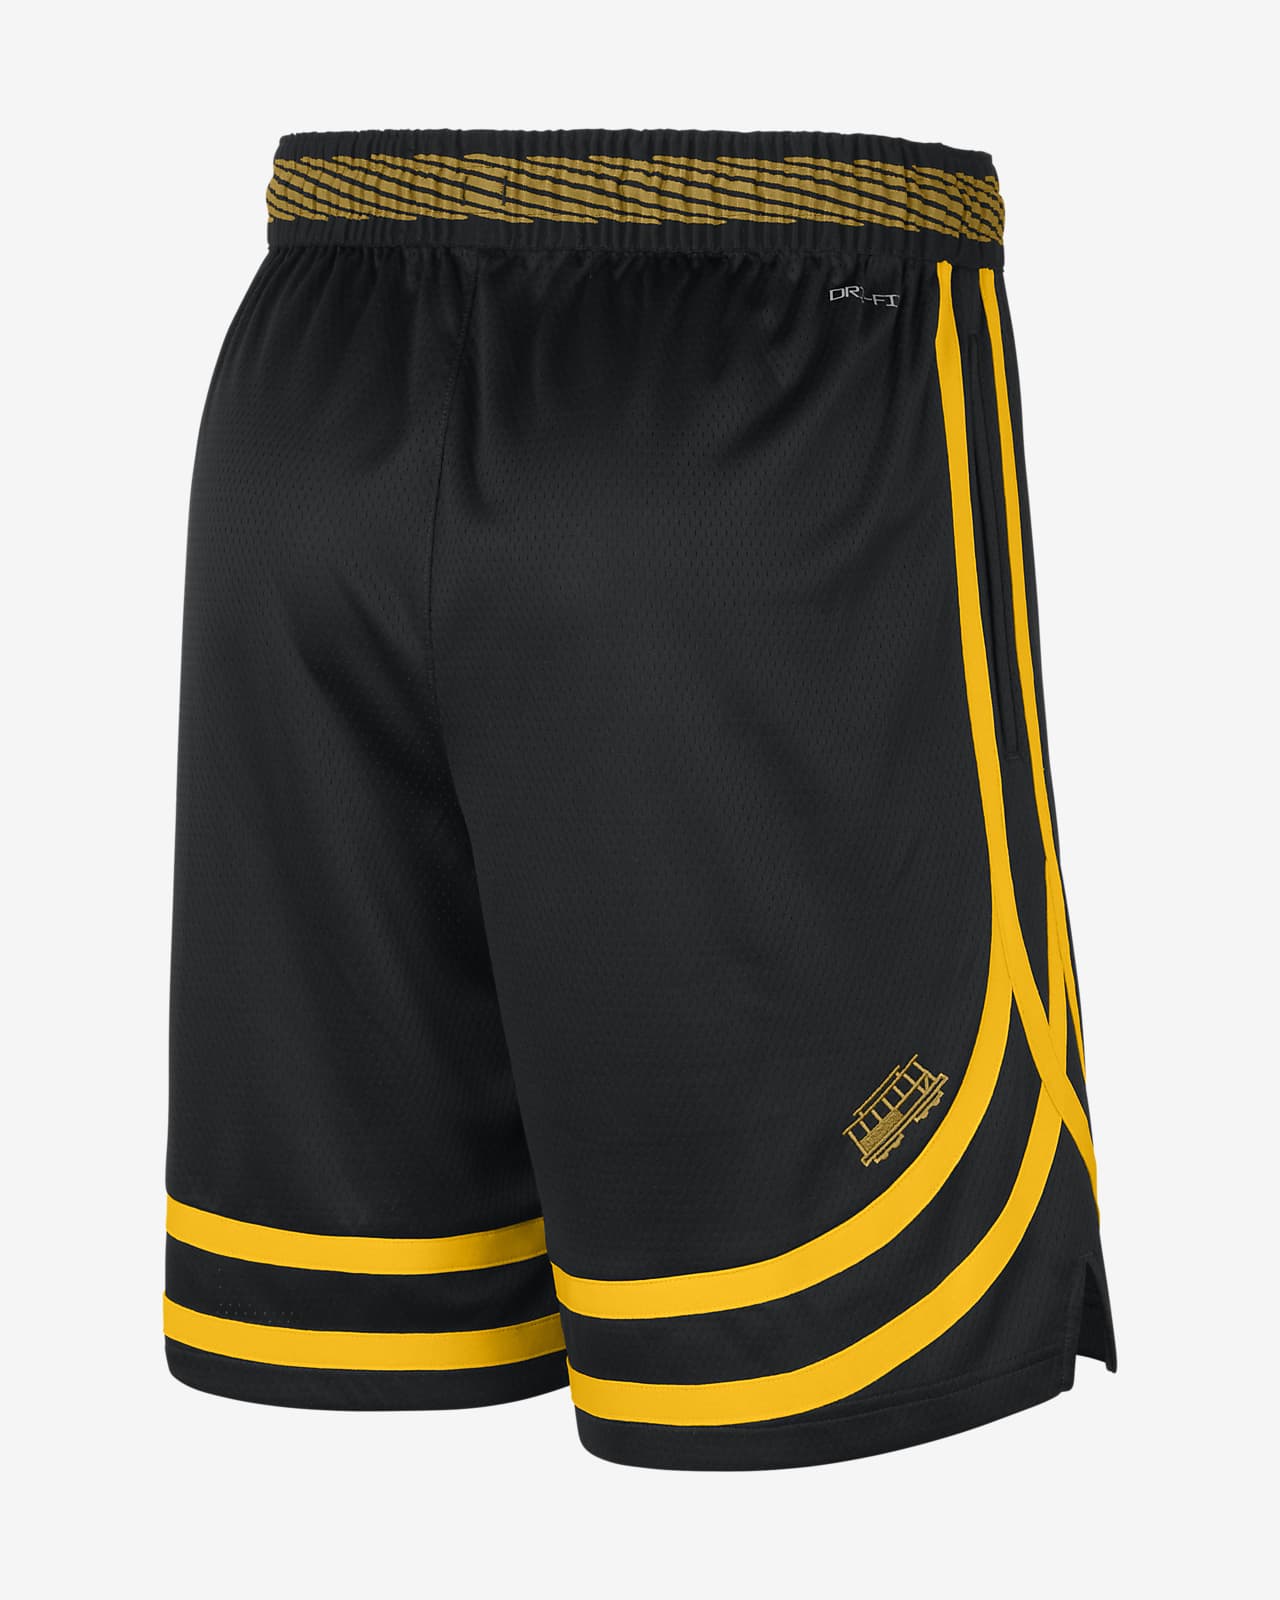 Nike Pro Cool NBA Shorts Men's Basketball Sz and 50 similar items